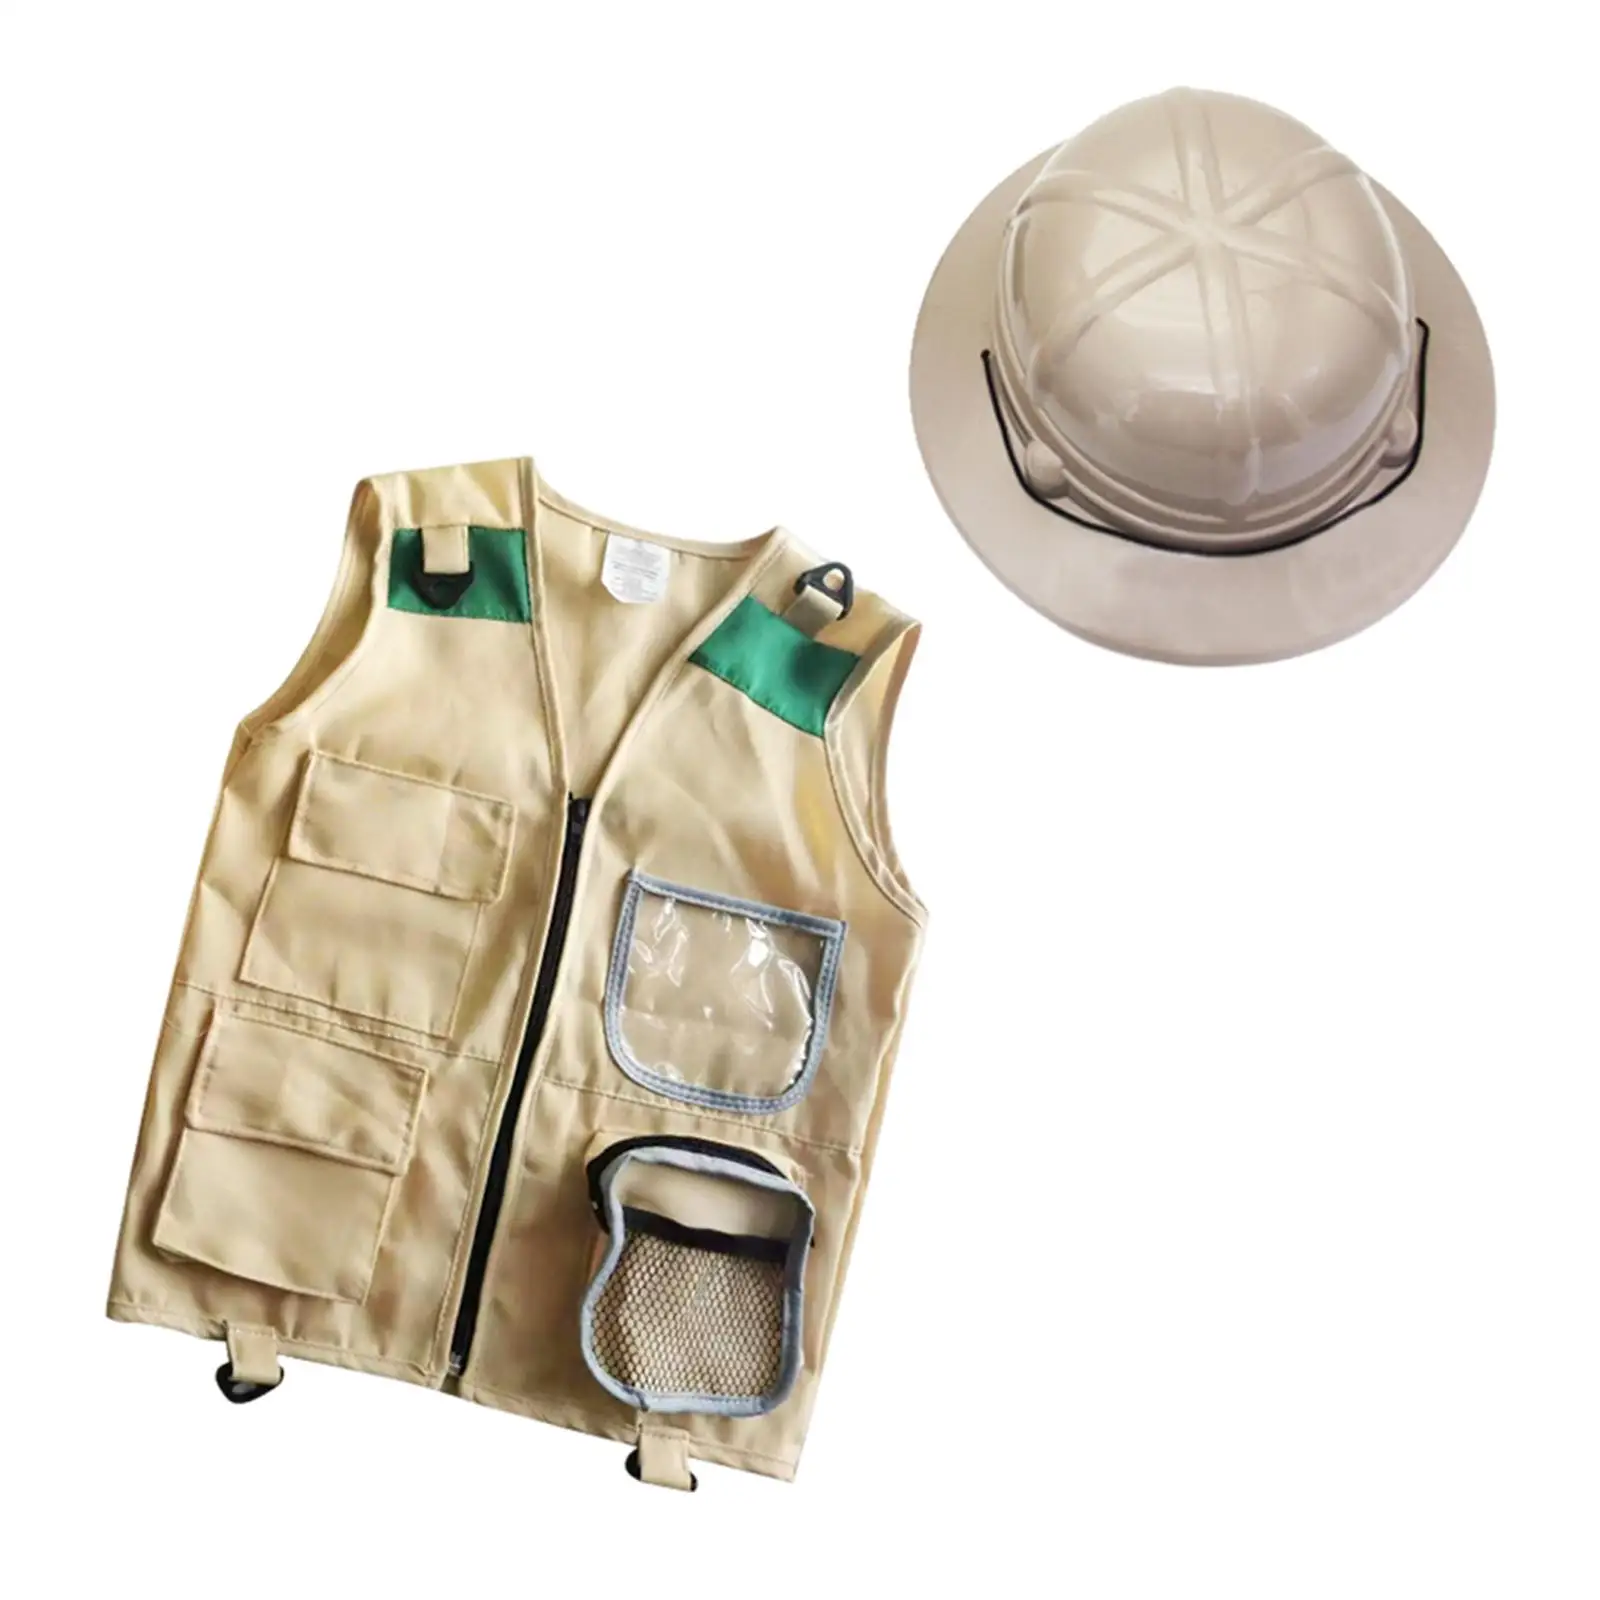 Explorer Kit, Kids Explorer Costume Set, Backyard Cargo Vest Dress up Role Play for Kid